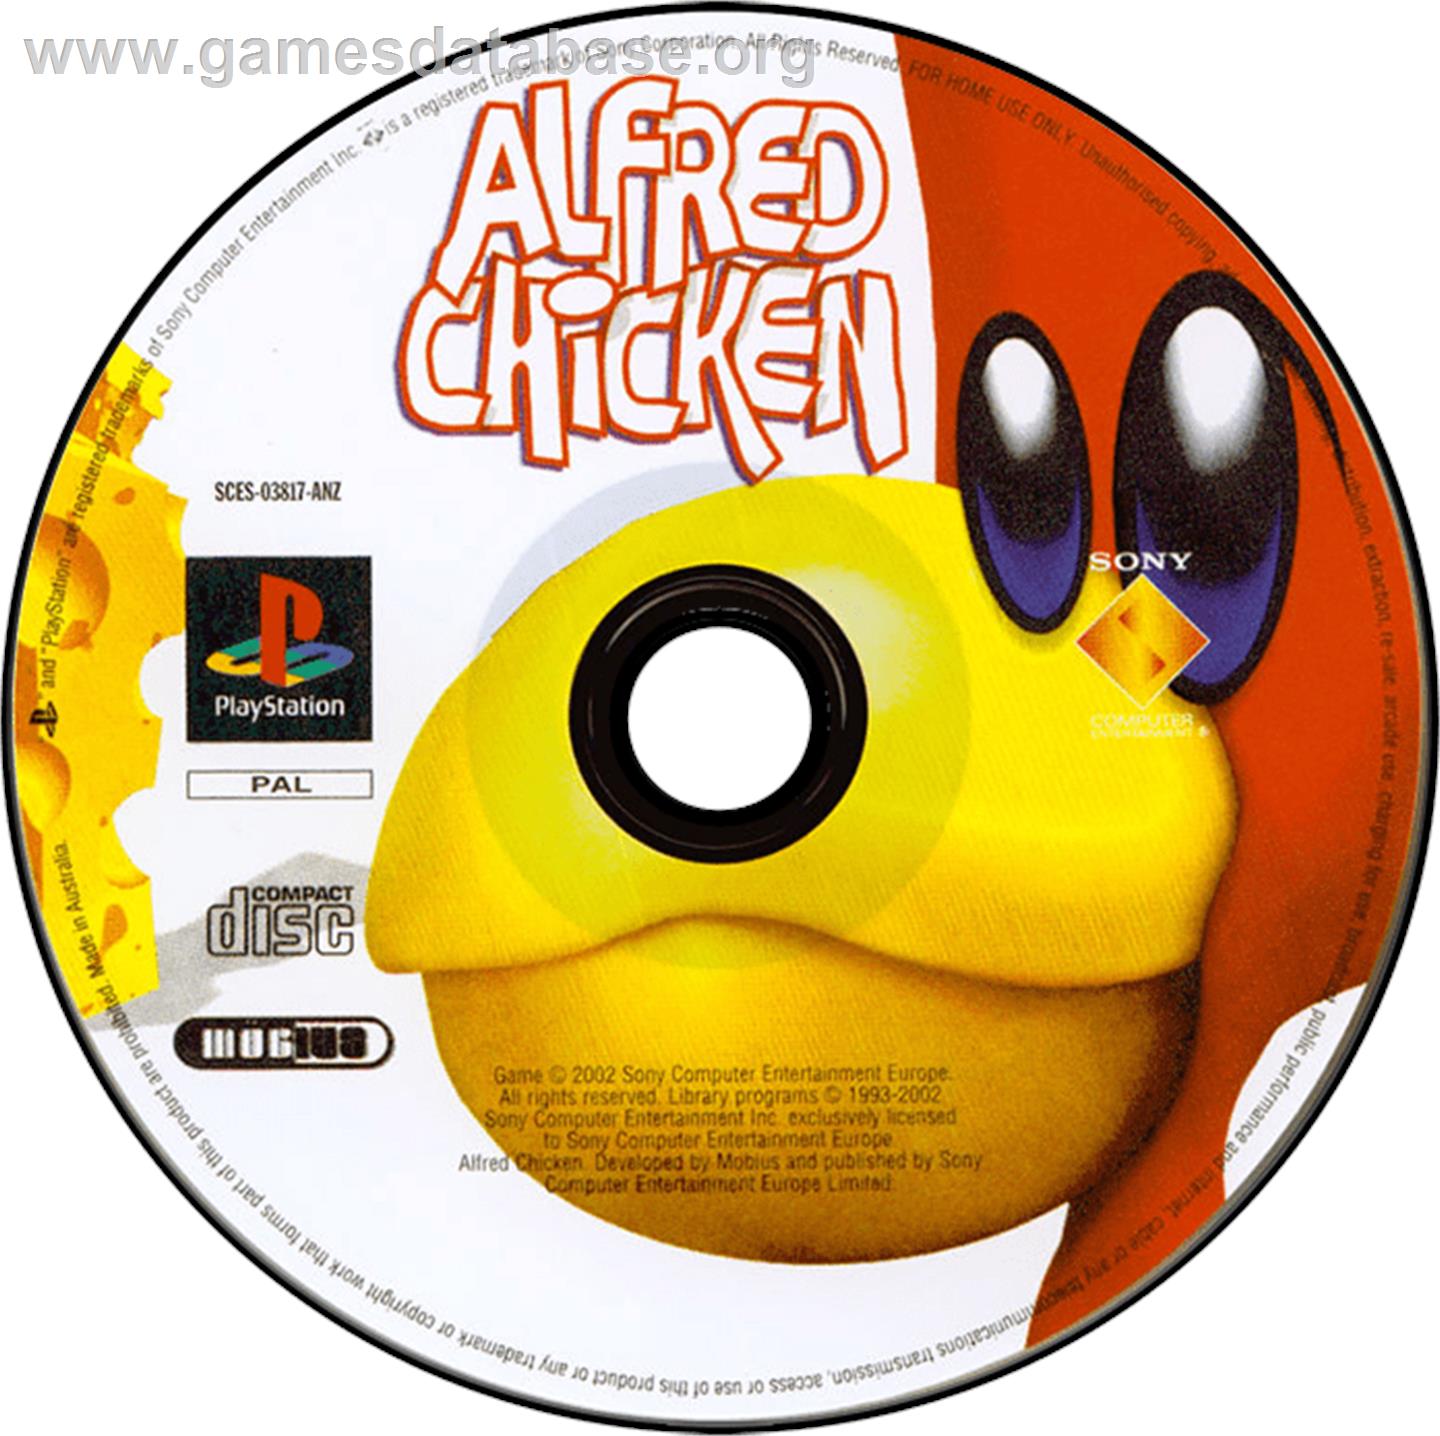 Alfred Chicken - Sony Playstation - Artwork - Disc